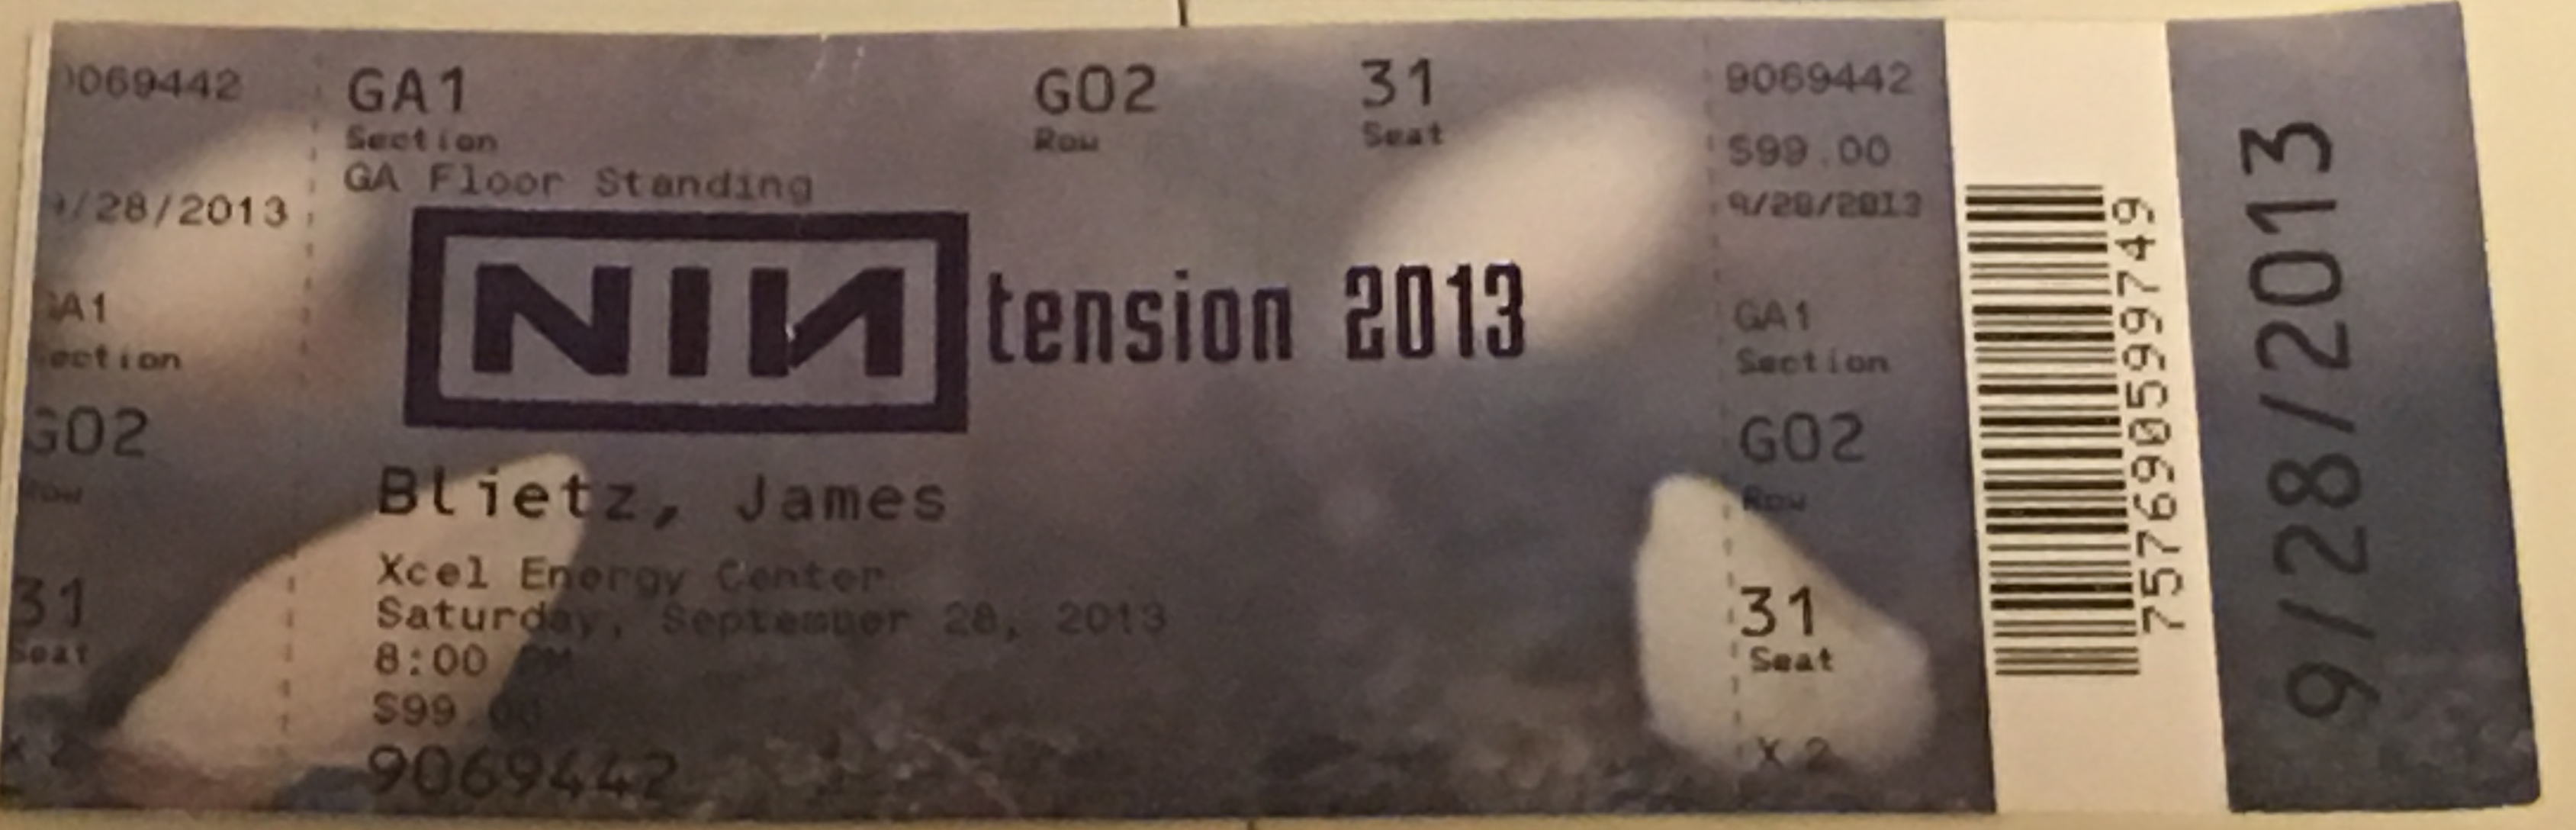 2013/09/28 Ticket